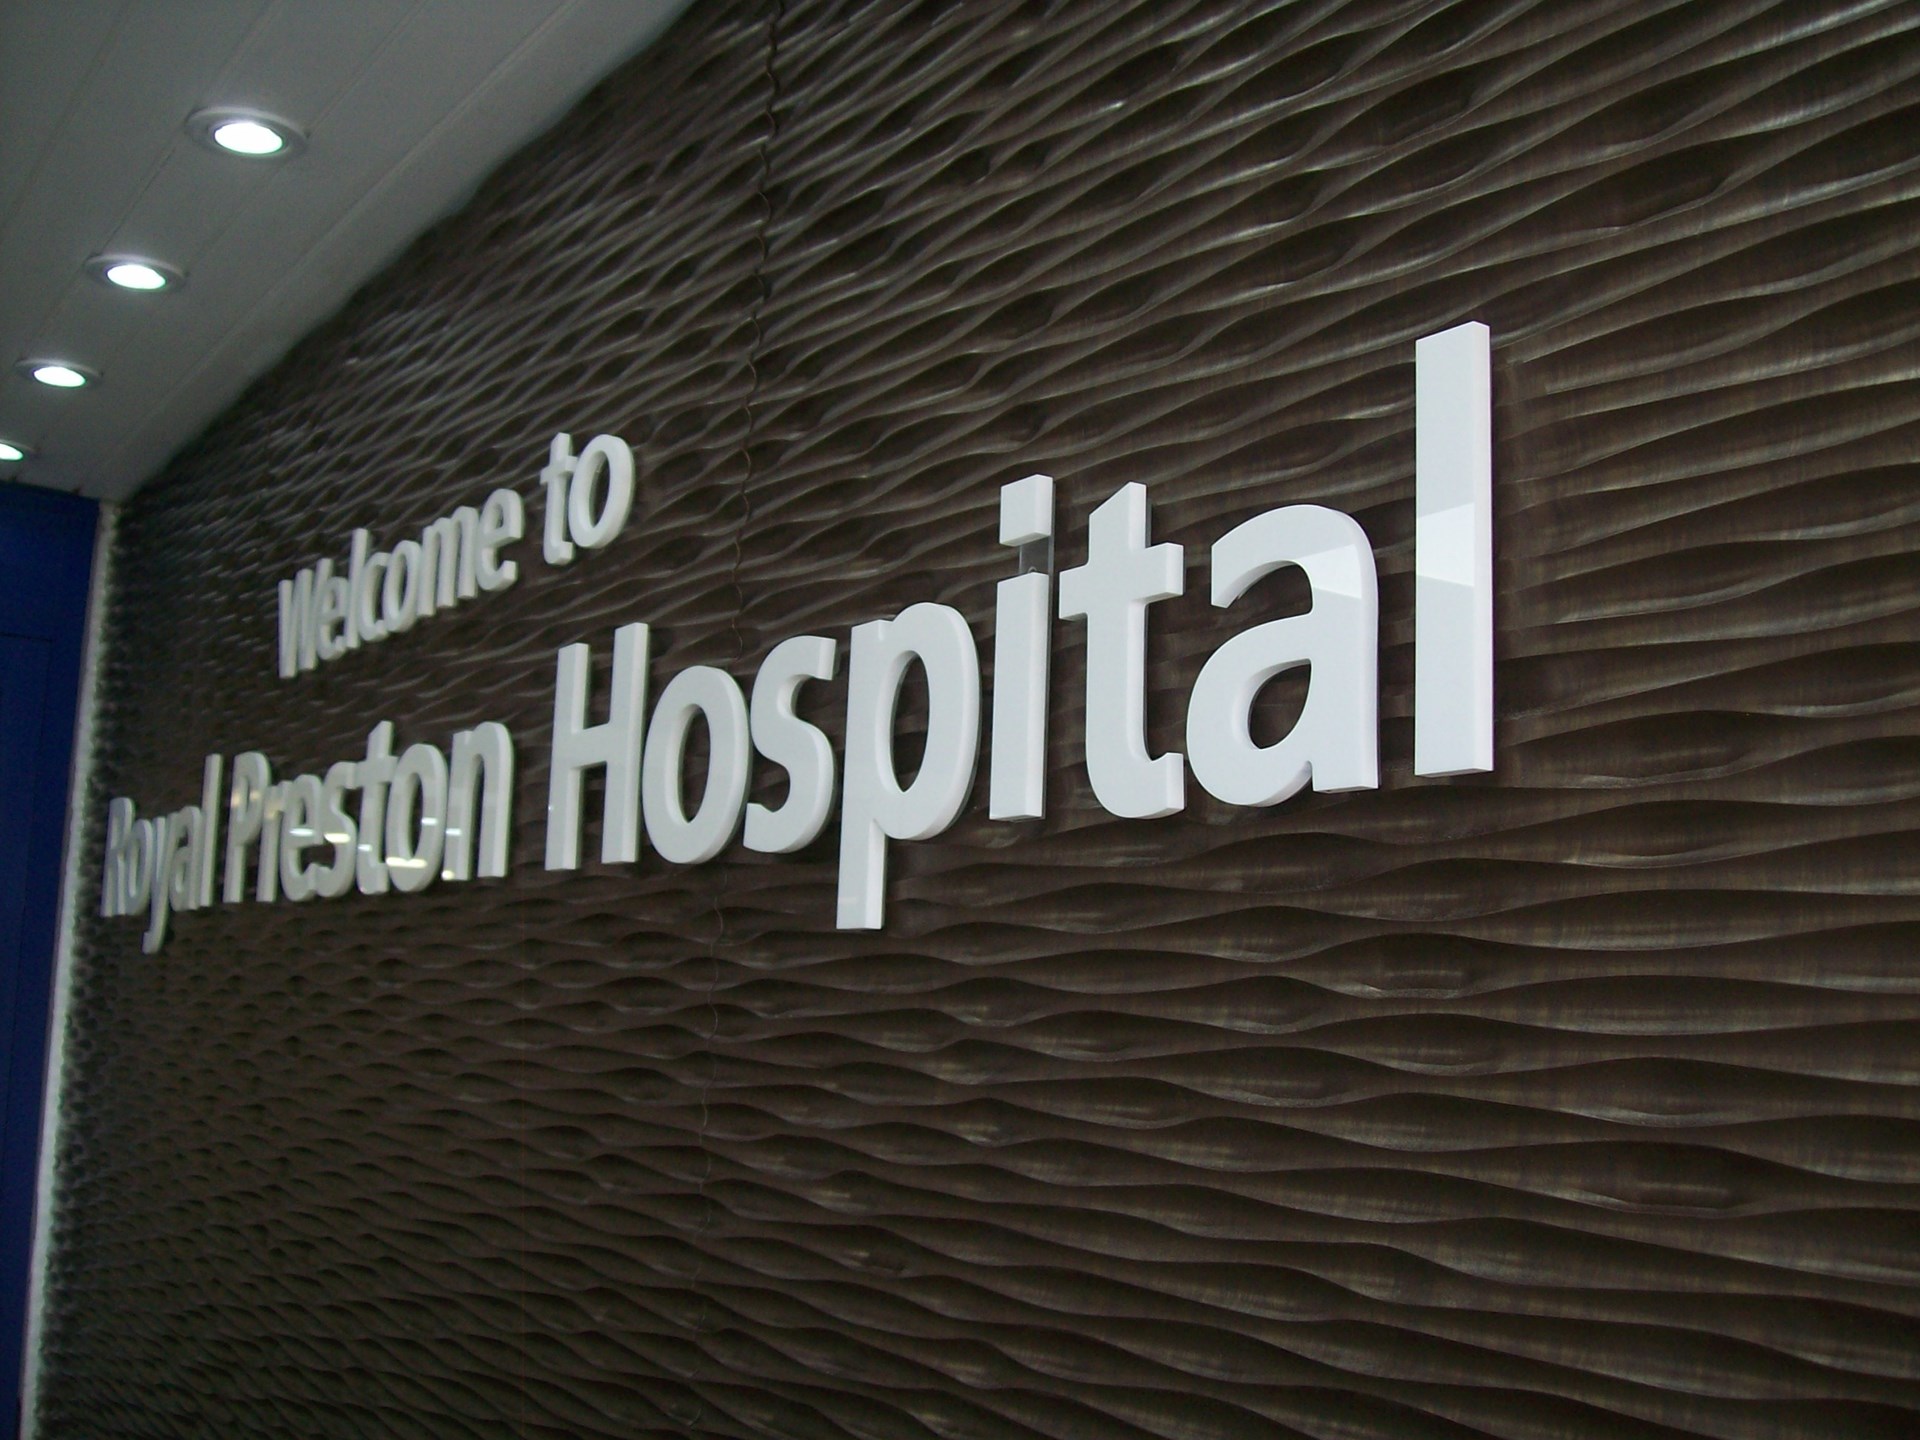 Welcome To Preston Hospital (2)